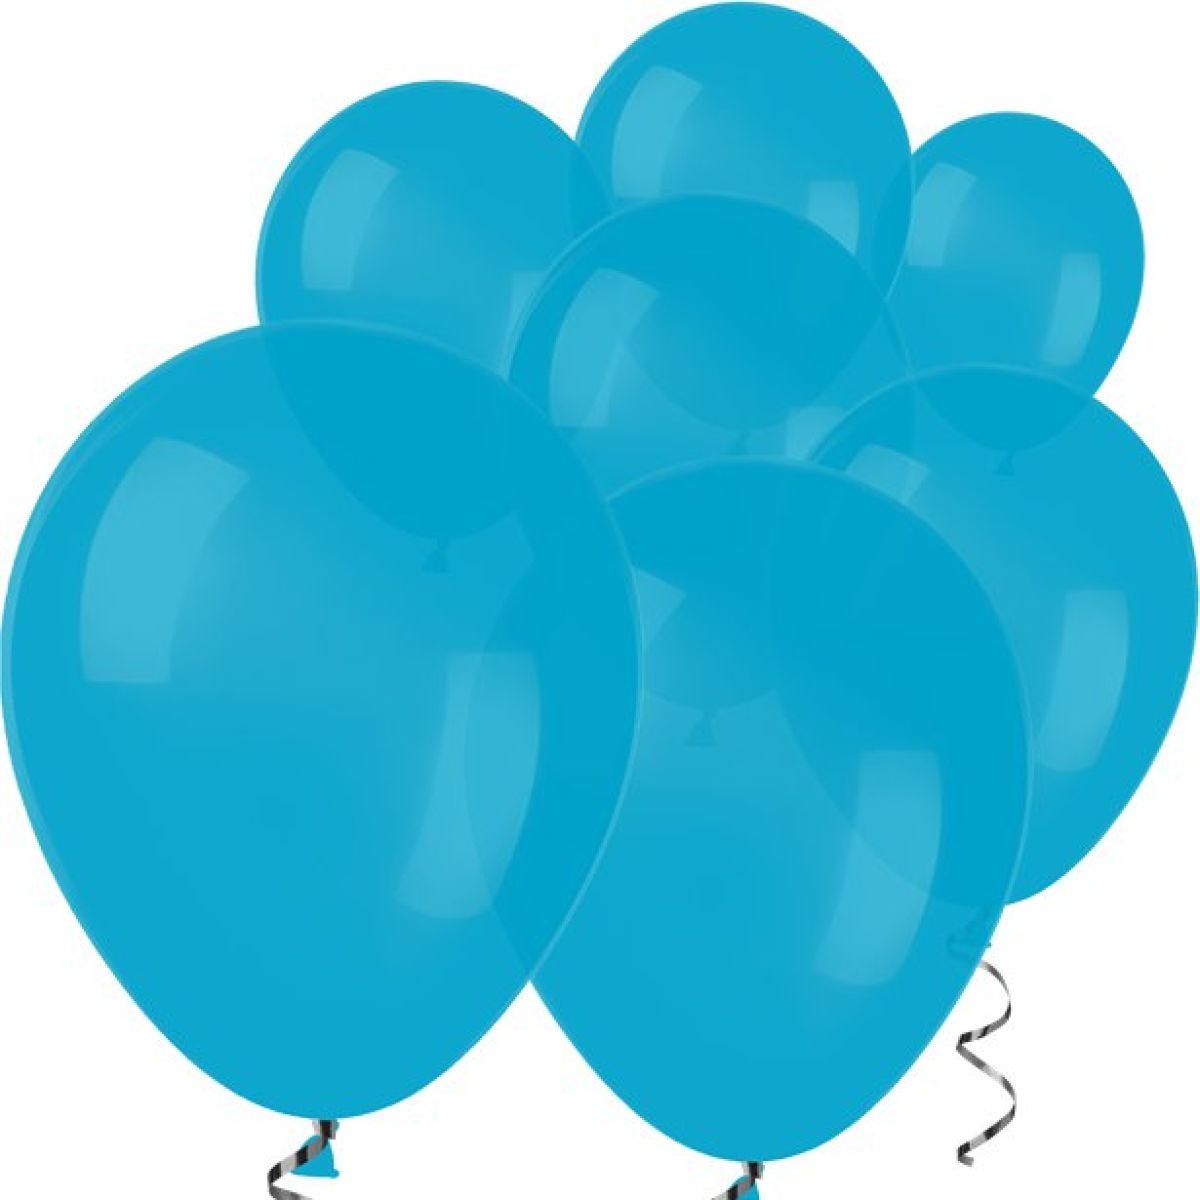 Blue Mini Balloons - 5" Latex Balloons